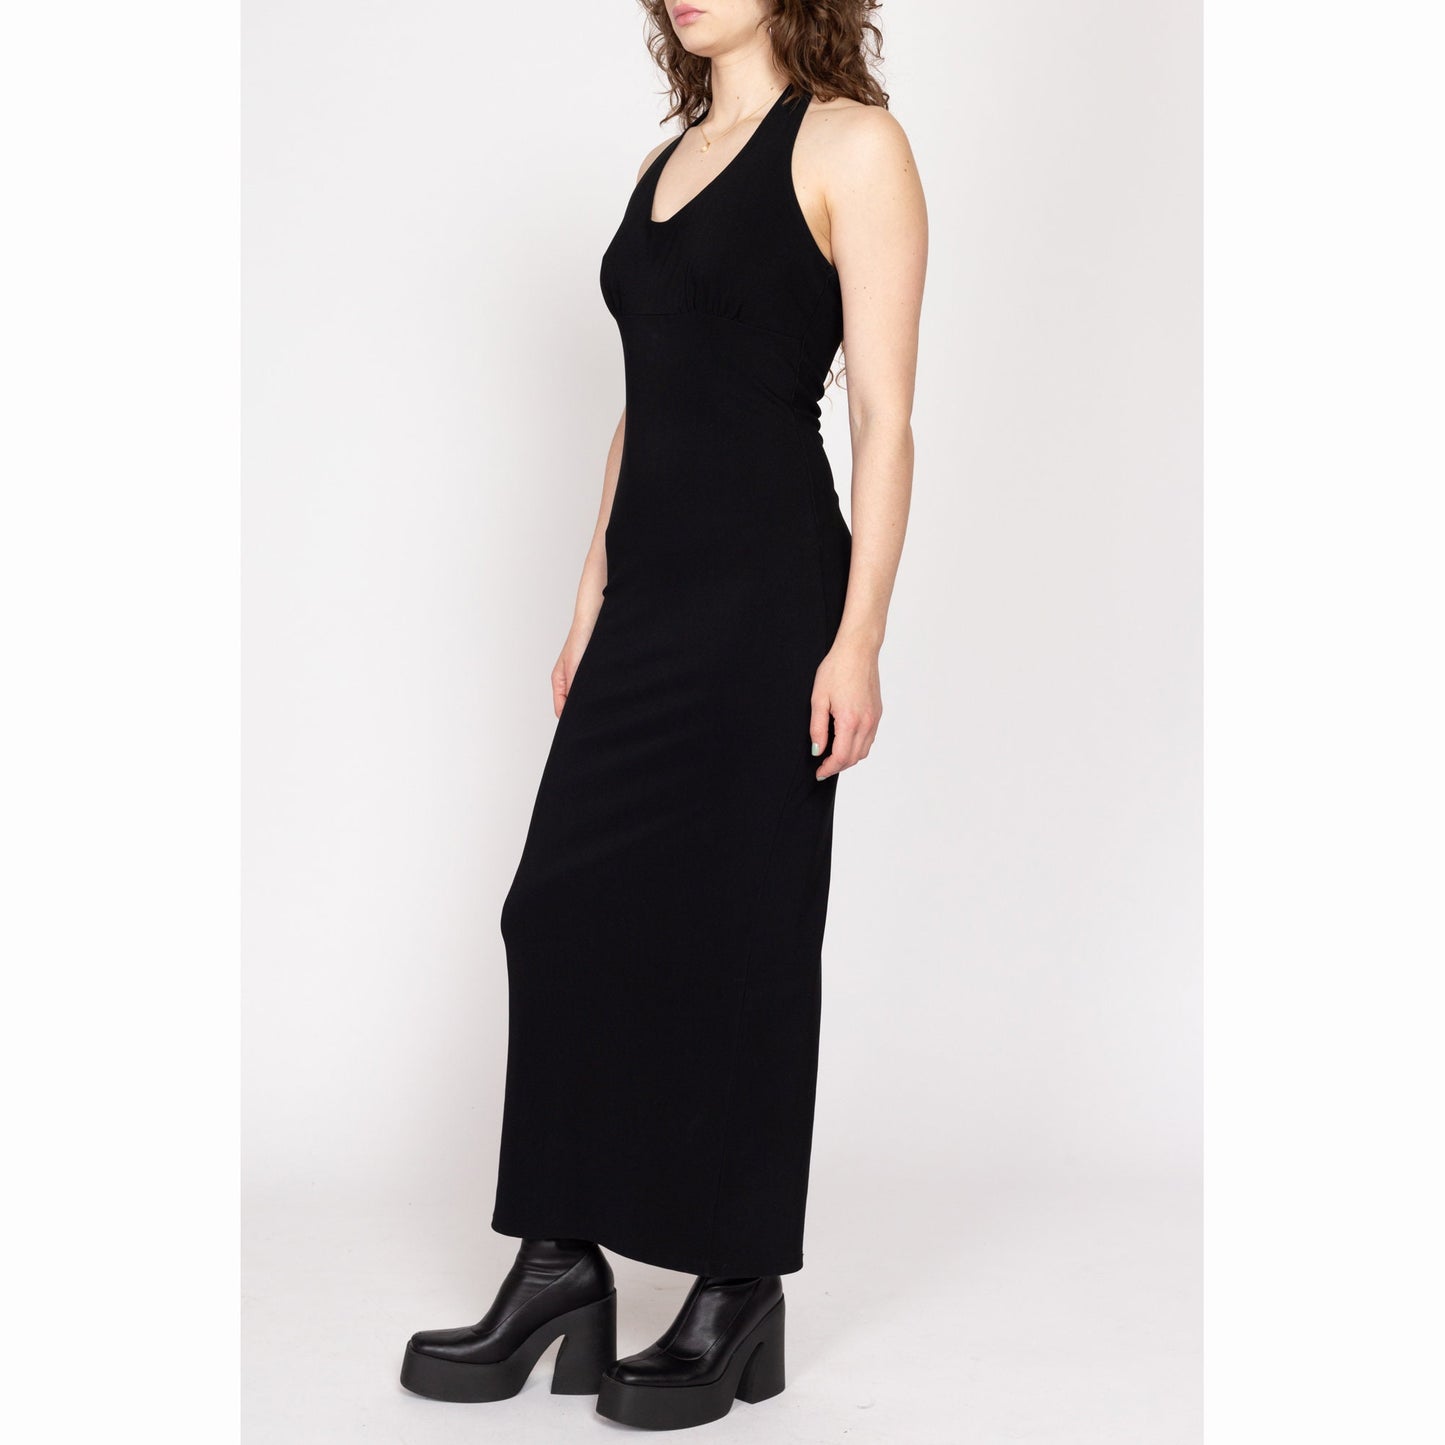 Medium 70s Black Halter Maxi Dress | Vintage Boho Backless Slinky Fitted Sundress